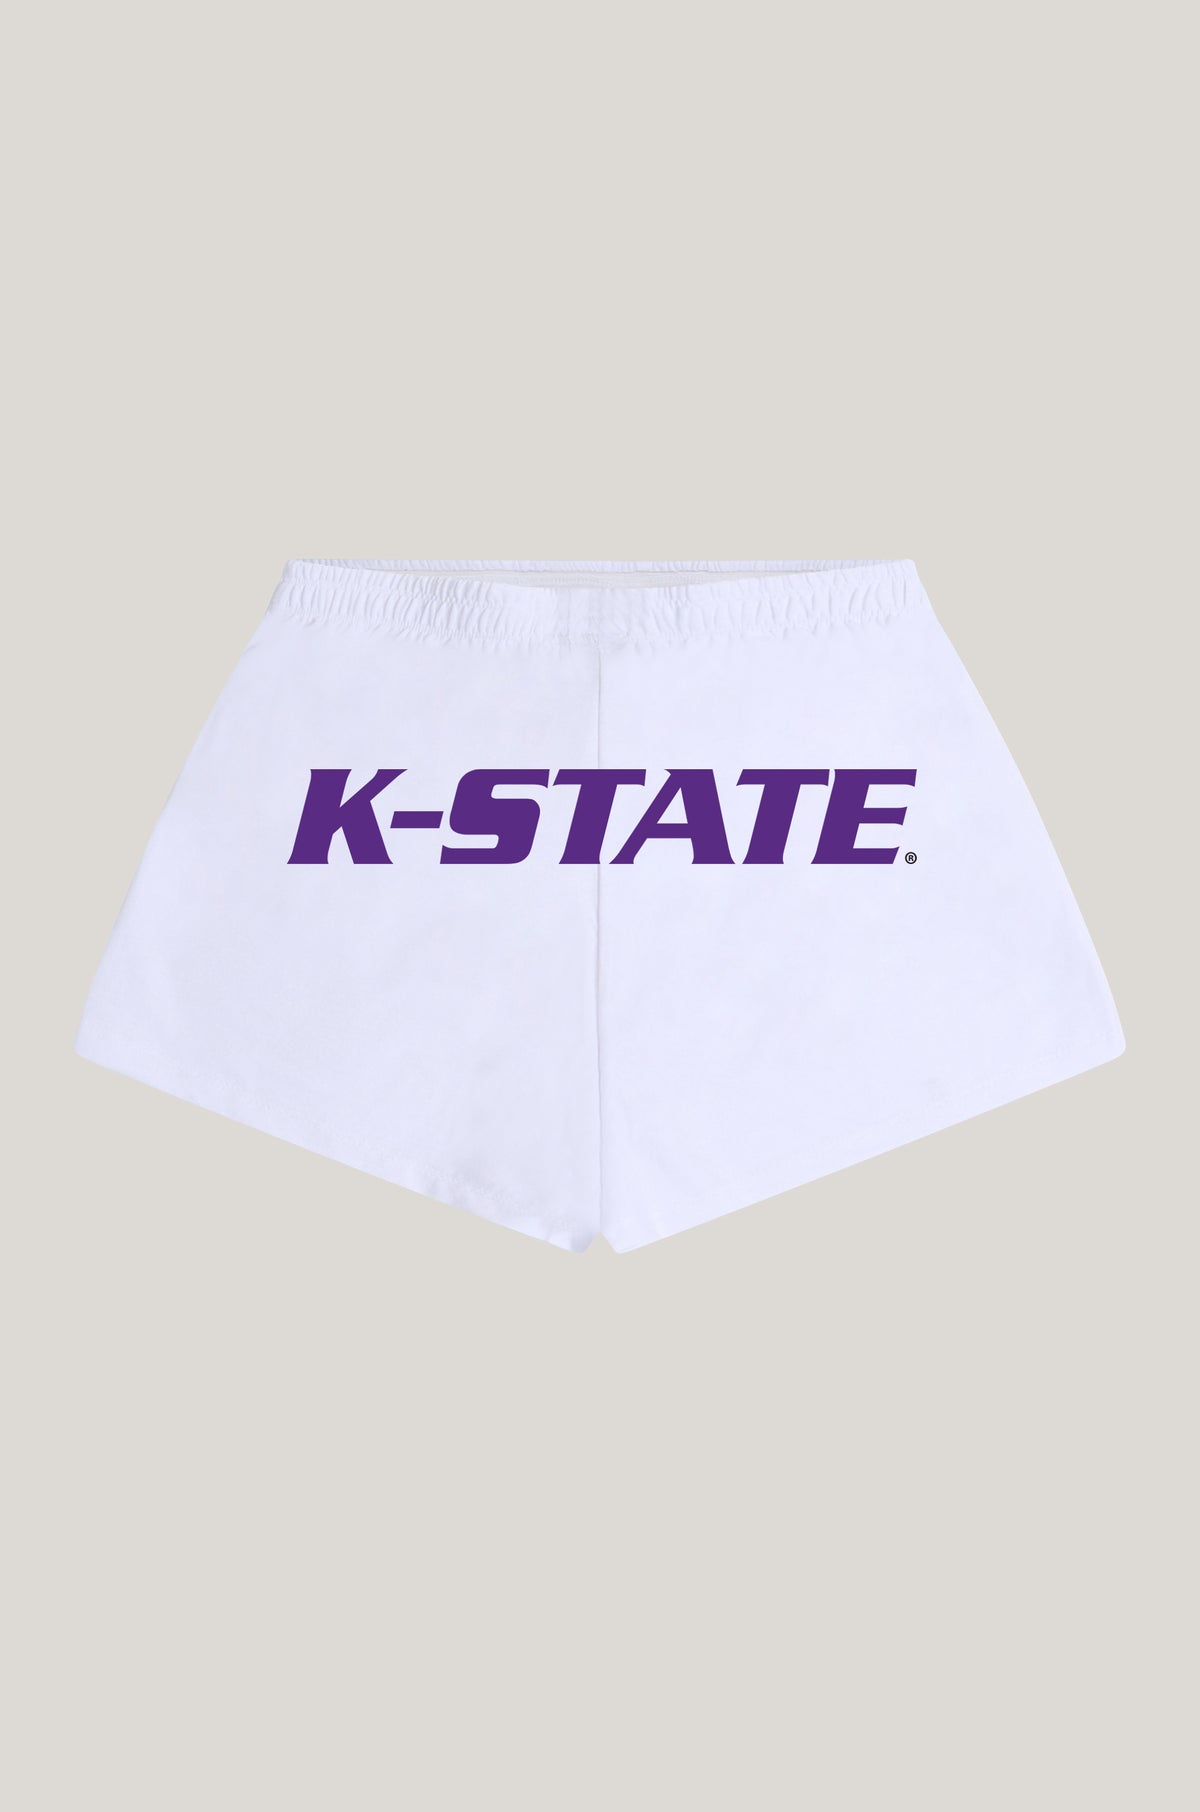 Kansas State P.E. Shorts